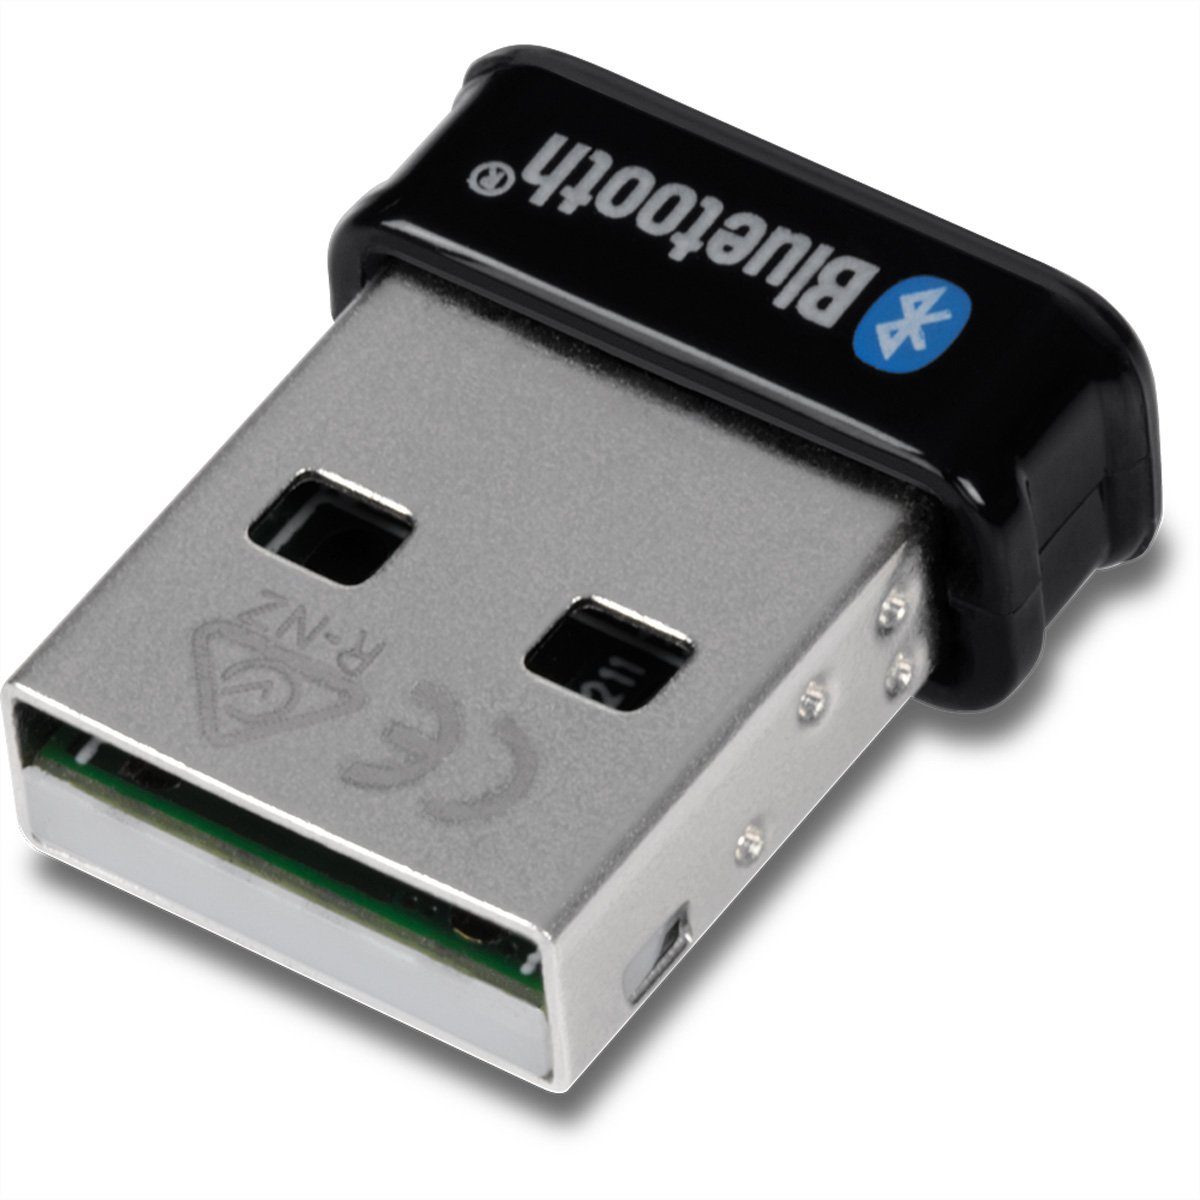 USB (Stecker) 2.0 Bluetooth A Typ USB TBW-110UB 5.0 Männlich Adapter Trendnet Micro Computer-Adapter